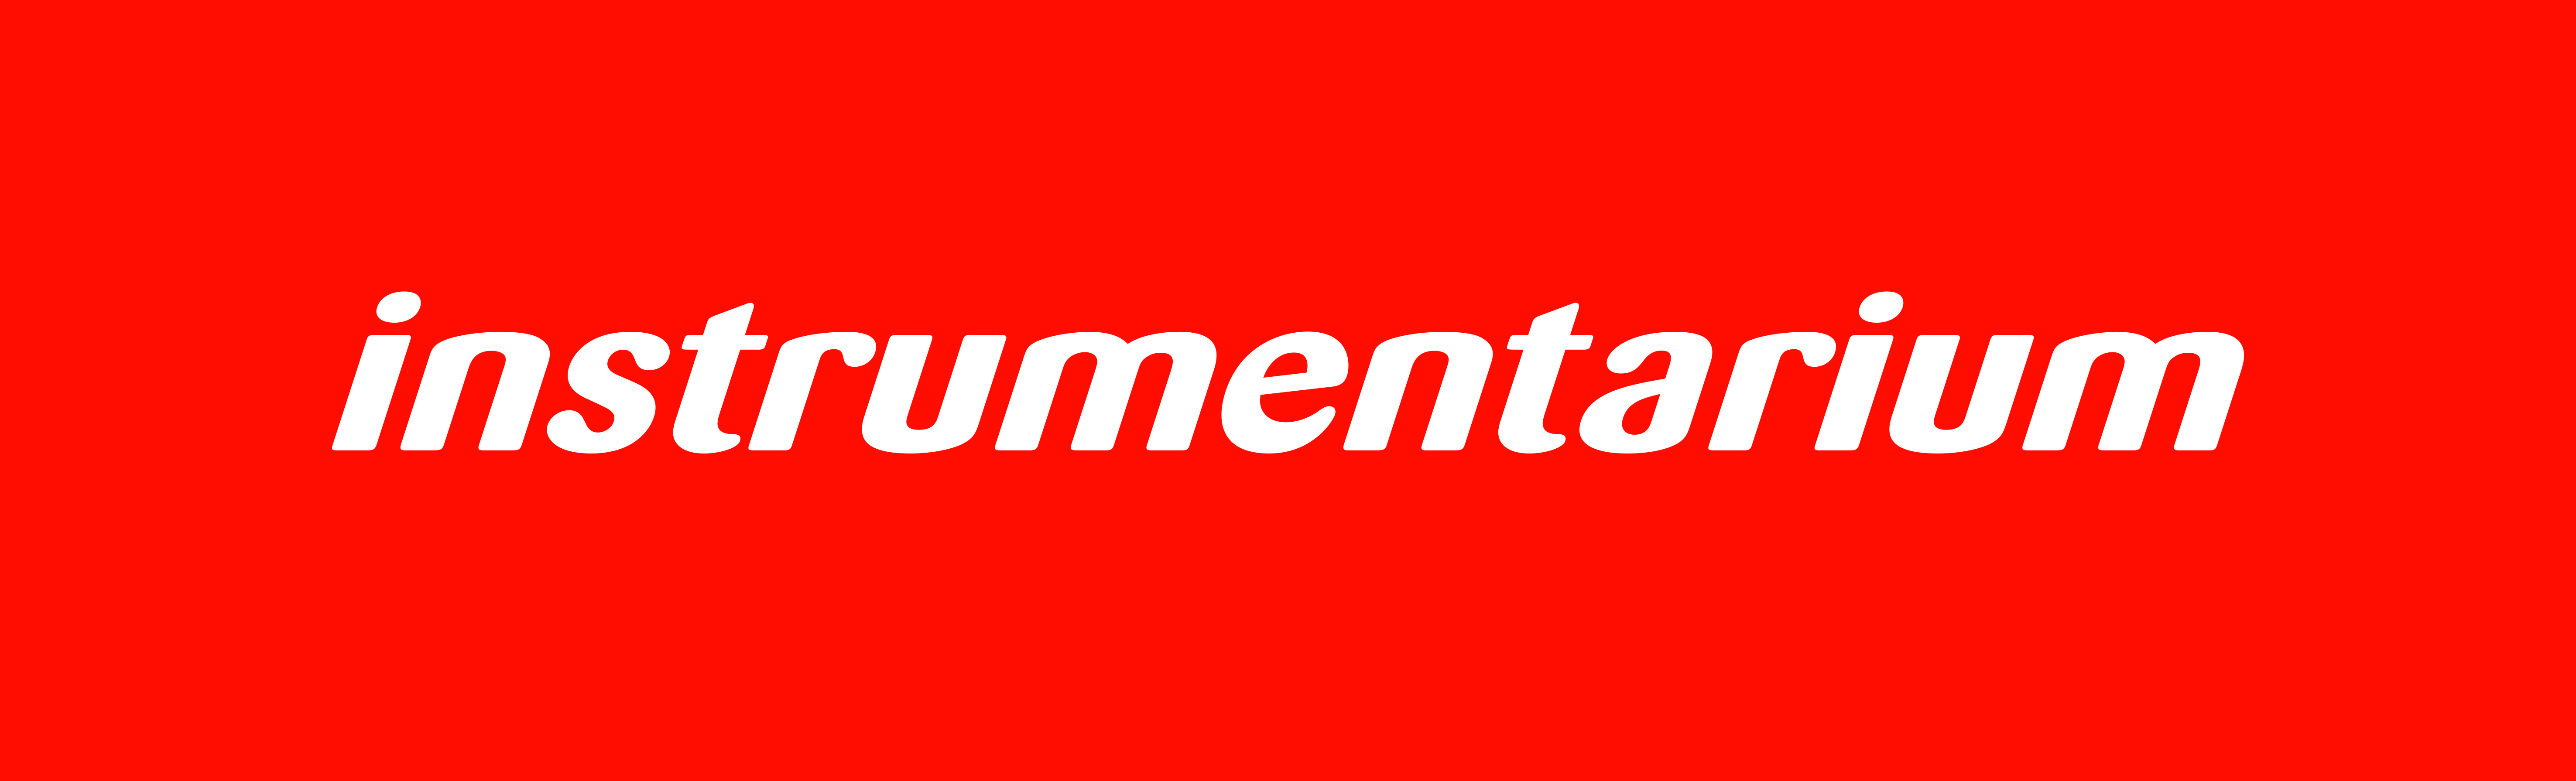 Instrumentarium logo punainen CMYK